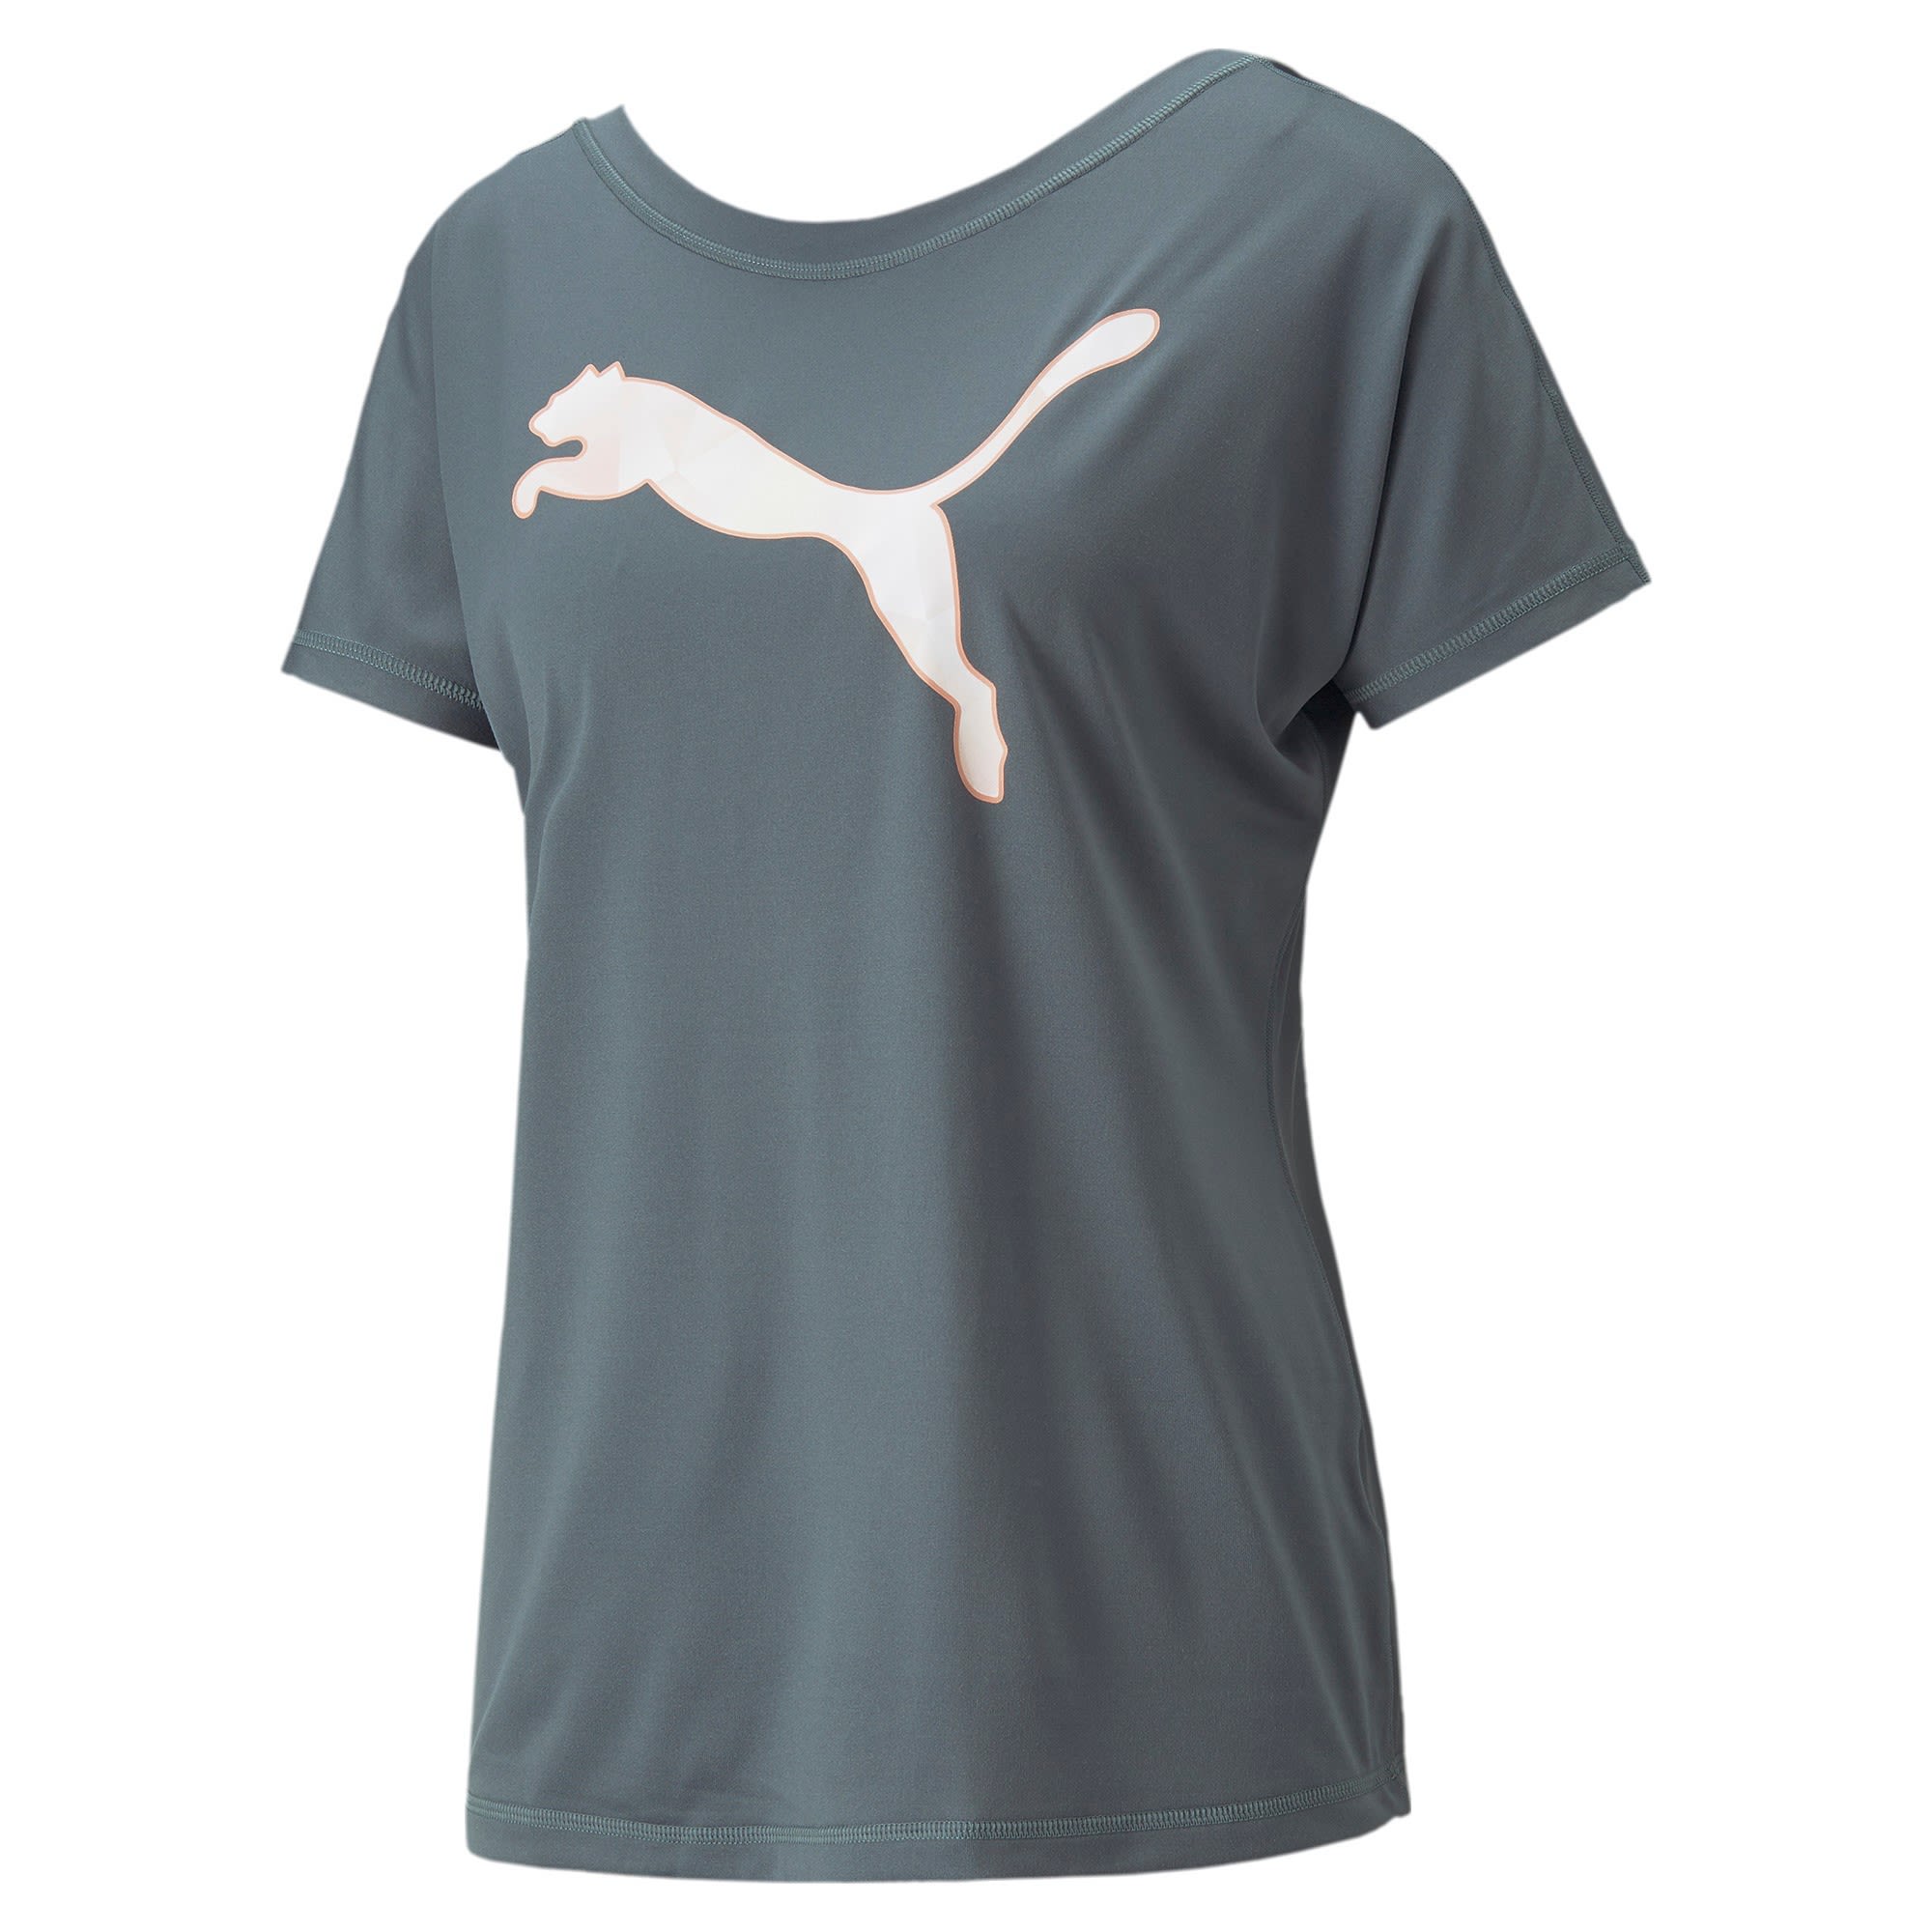 Puma Train Favourite Jersey Tee Grau- Female Kurzarm-Shirts- Grsse M - Farbe Dark Slate